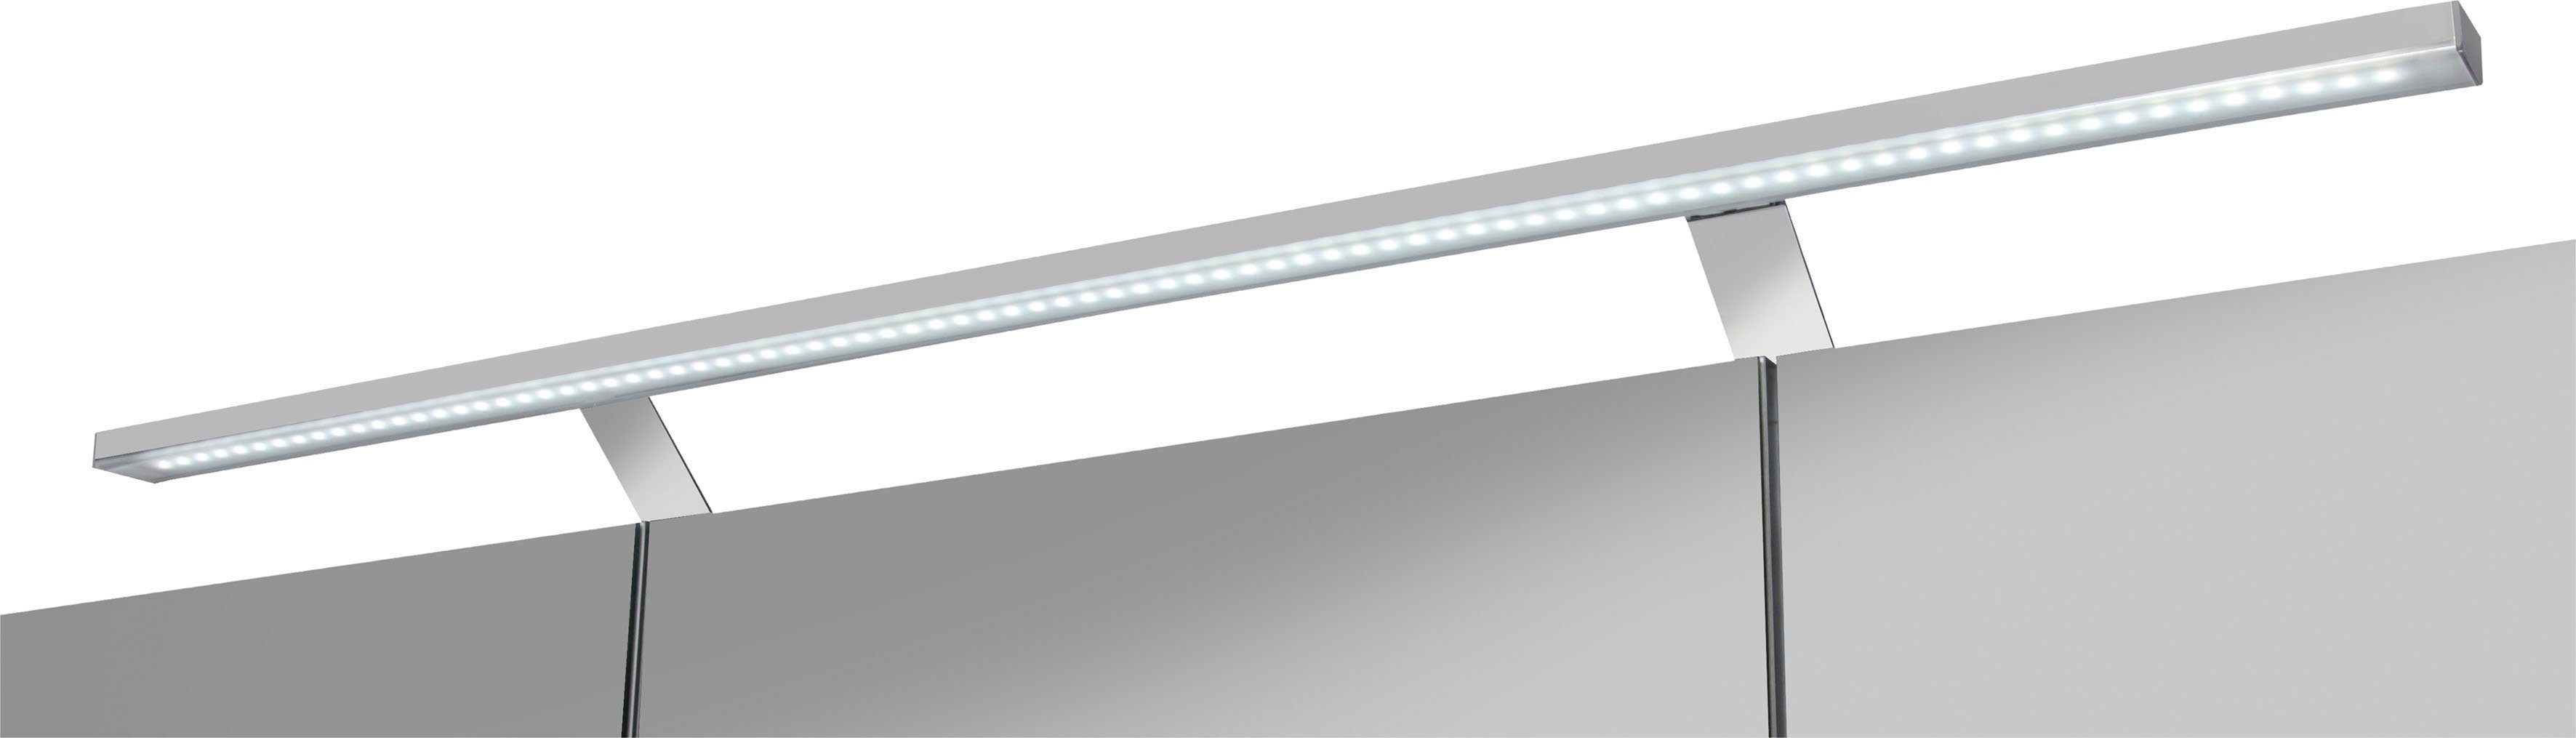 welltime Spiegelschrank Torino Breite Schalter-/Steckdosenbox basaltgrau basaltgrau 3-türig, cm, 120 LED-Beleuchtung, 